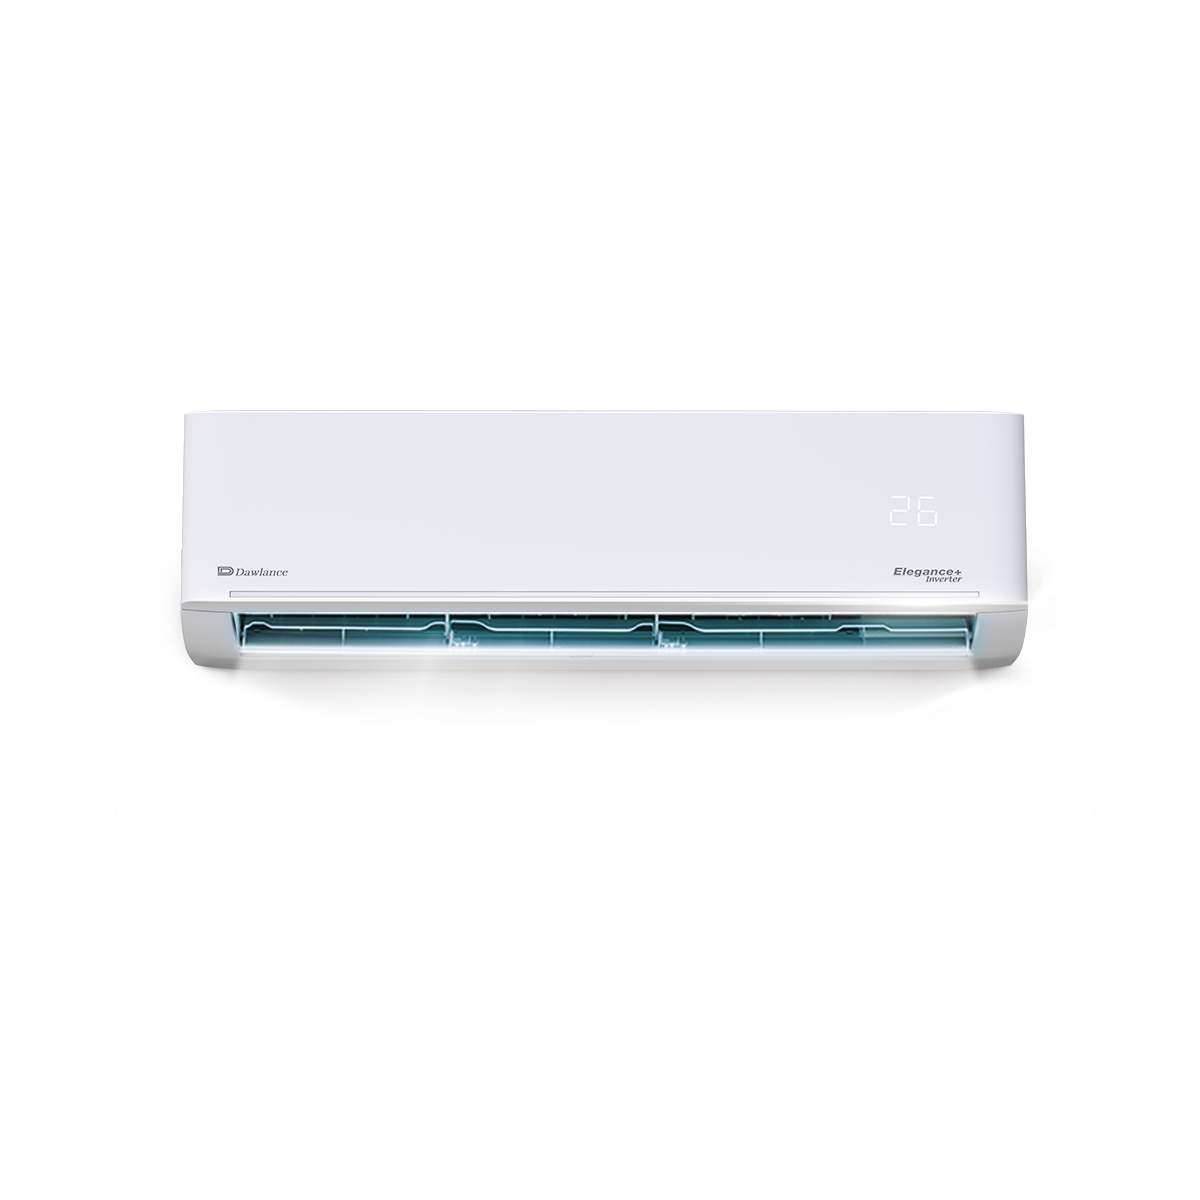 Dawlance Air Conditioner 1.5 Ton - ELEGANCE 30 UV + Inverter